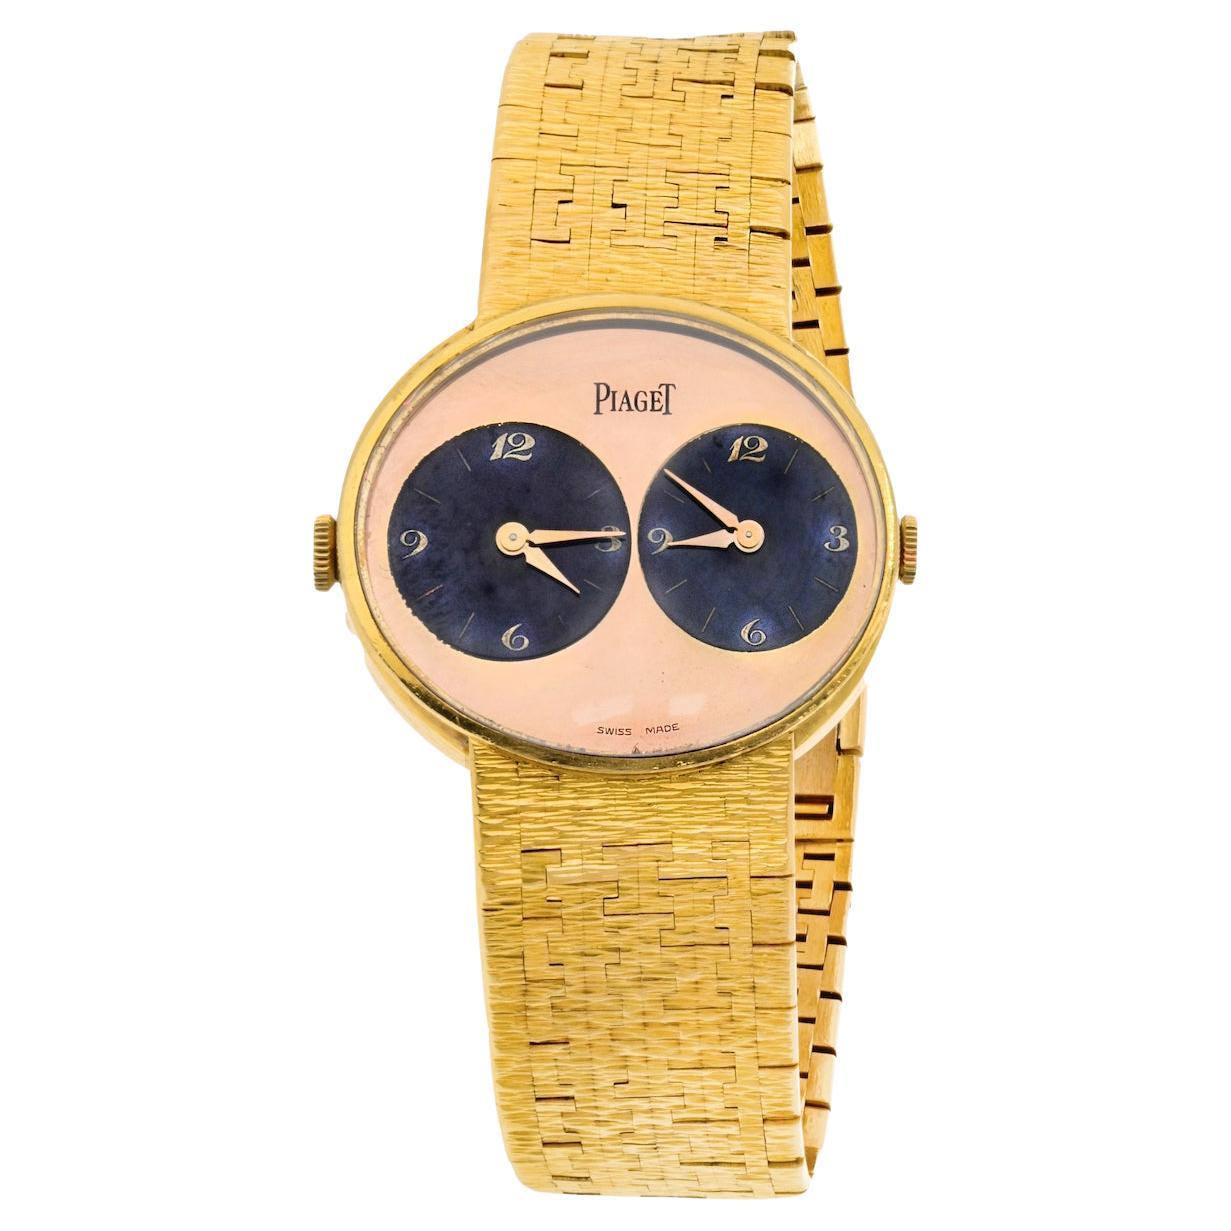 Piaget 18K Yellow Gold Duo Time Circa 1970's Watch